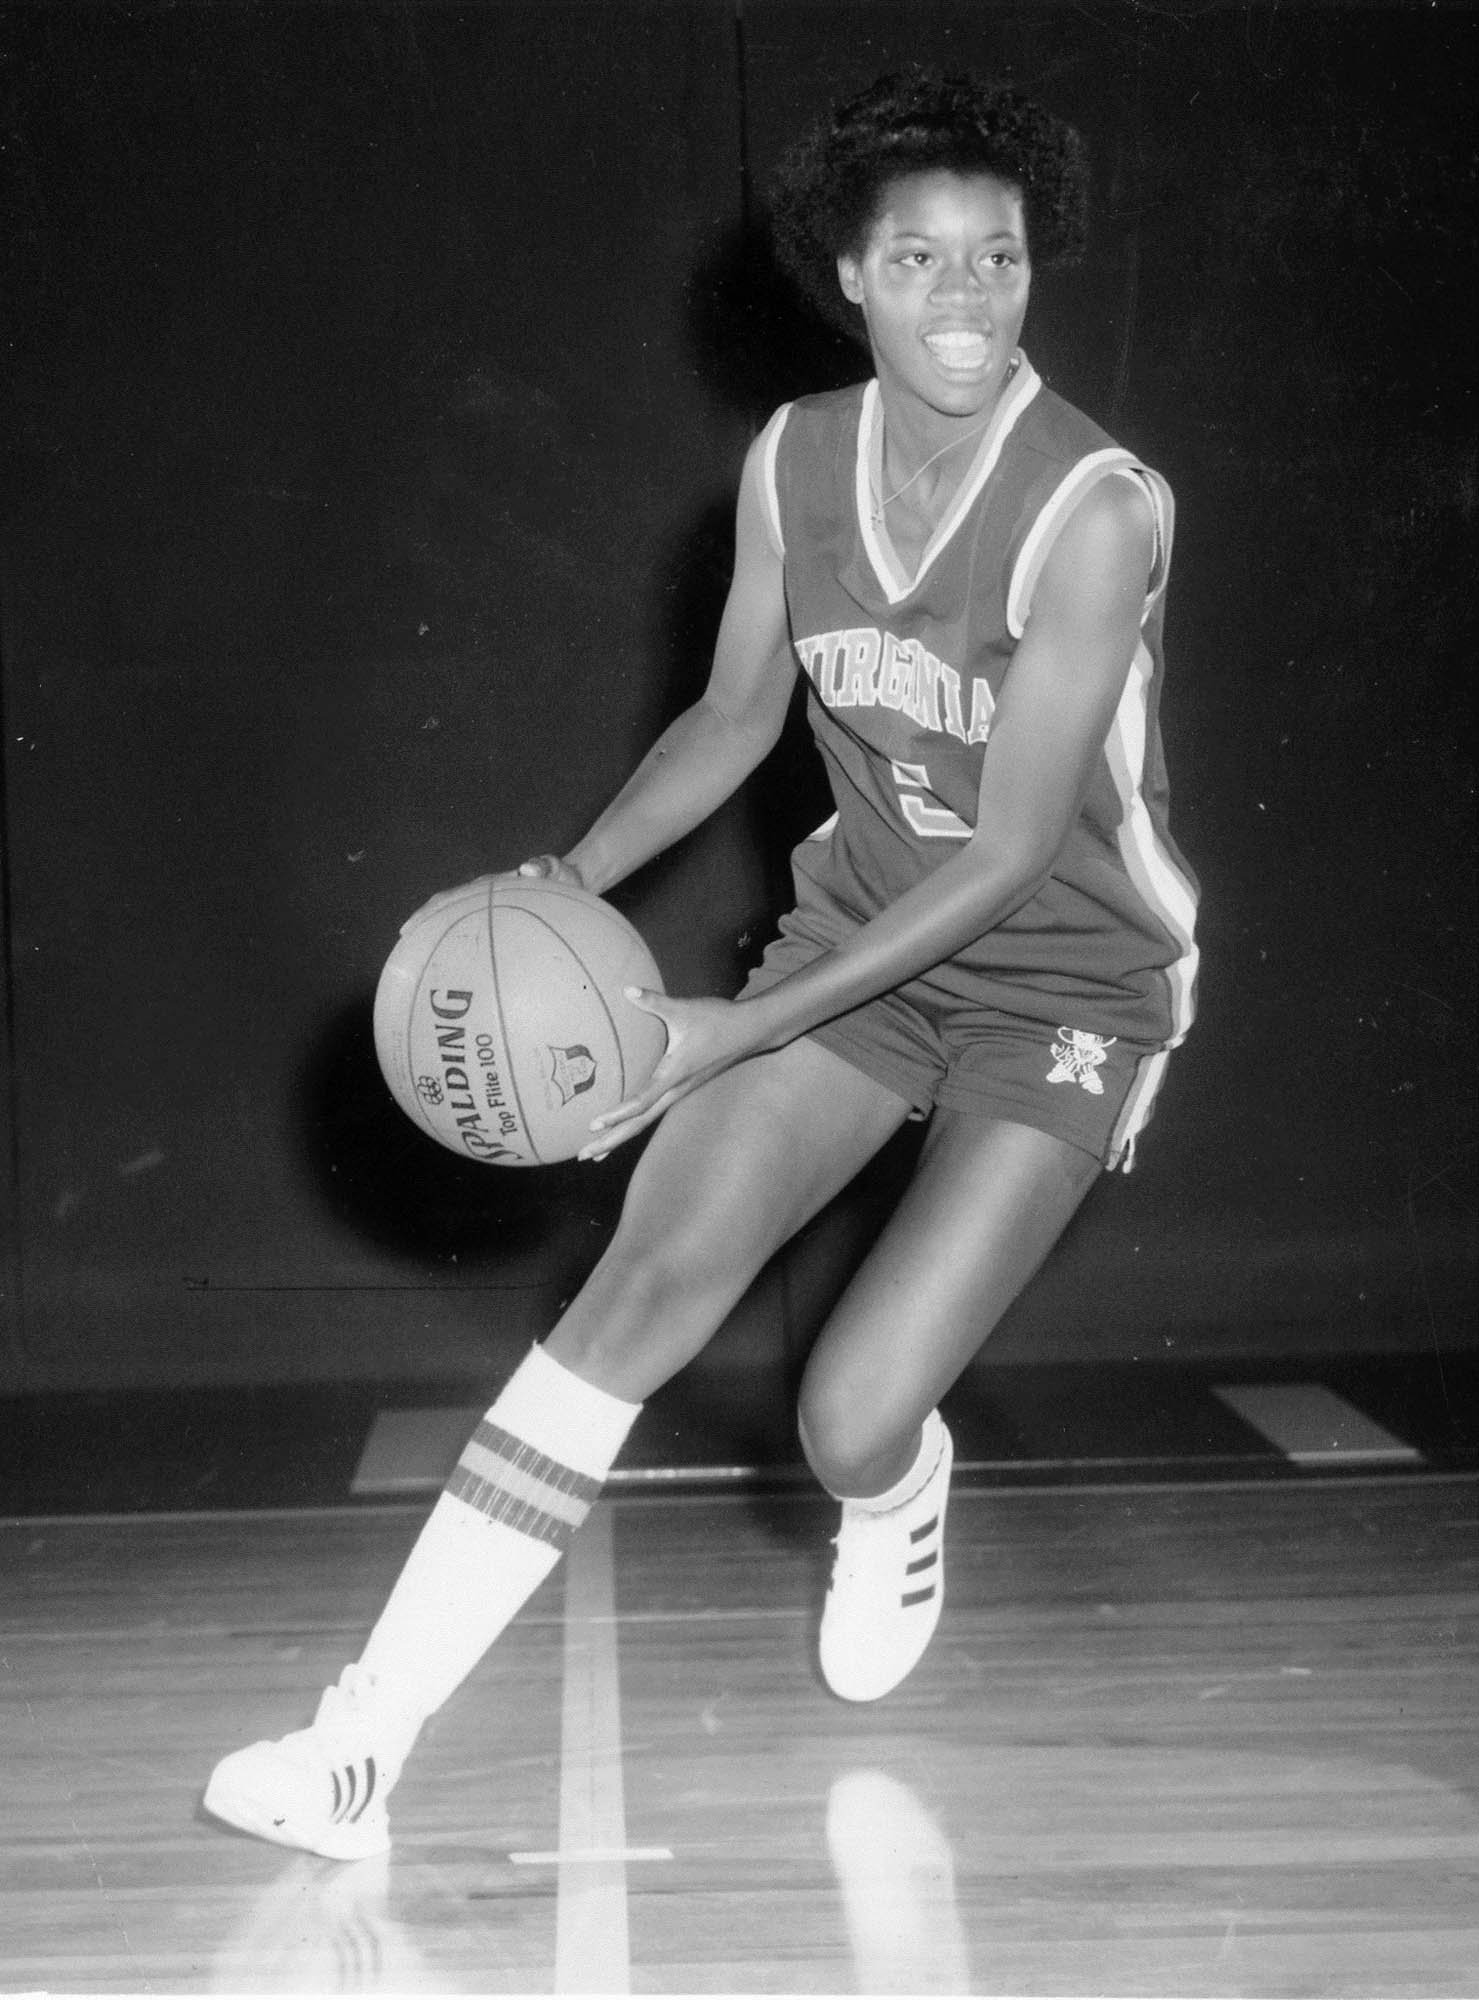 Stroman dribbling a basketball on a basketball court in a UVA uniform